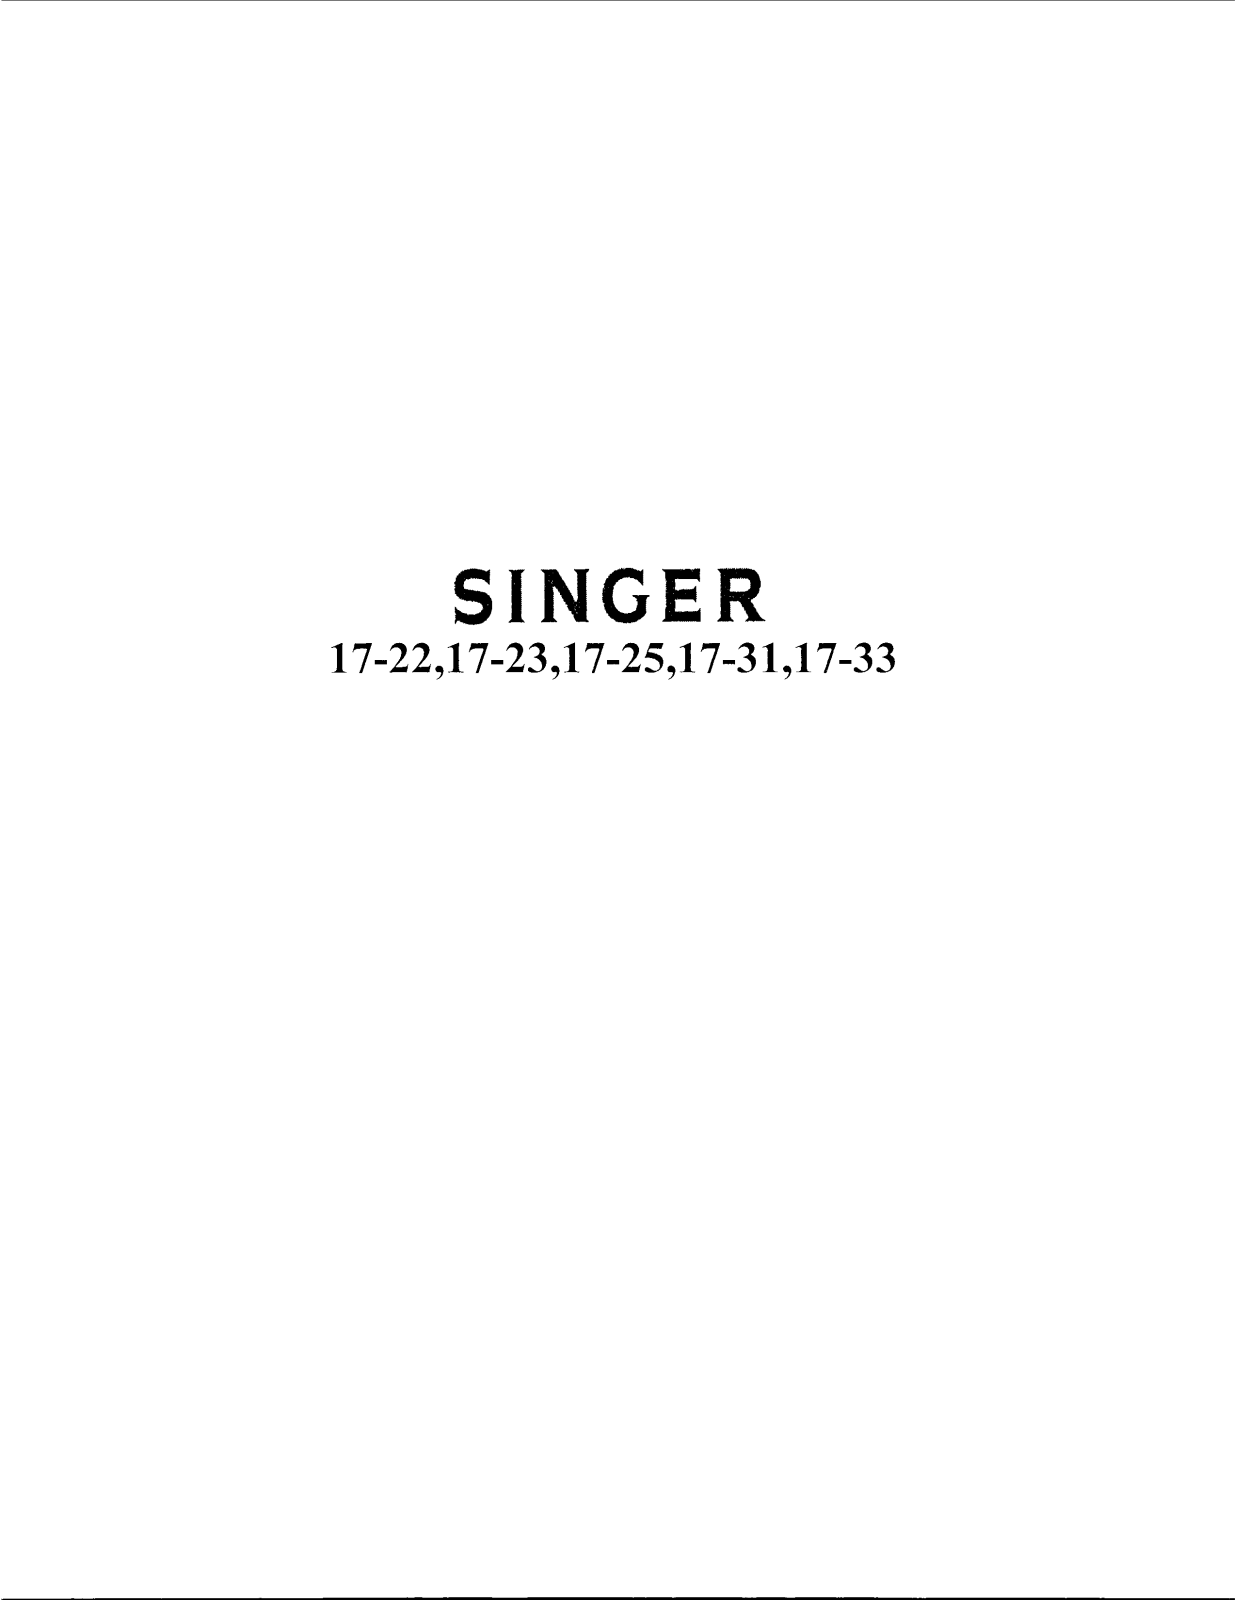 Singer 17-41, 17-30, 17-33, 17-12, 17-24 User Manual